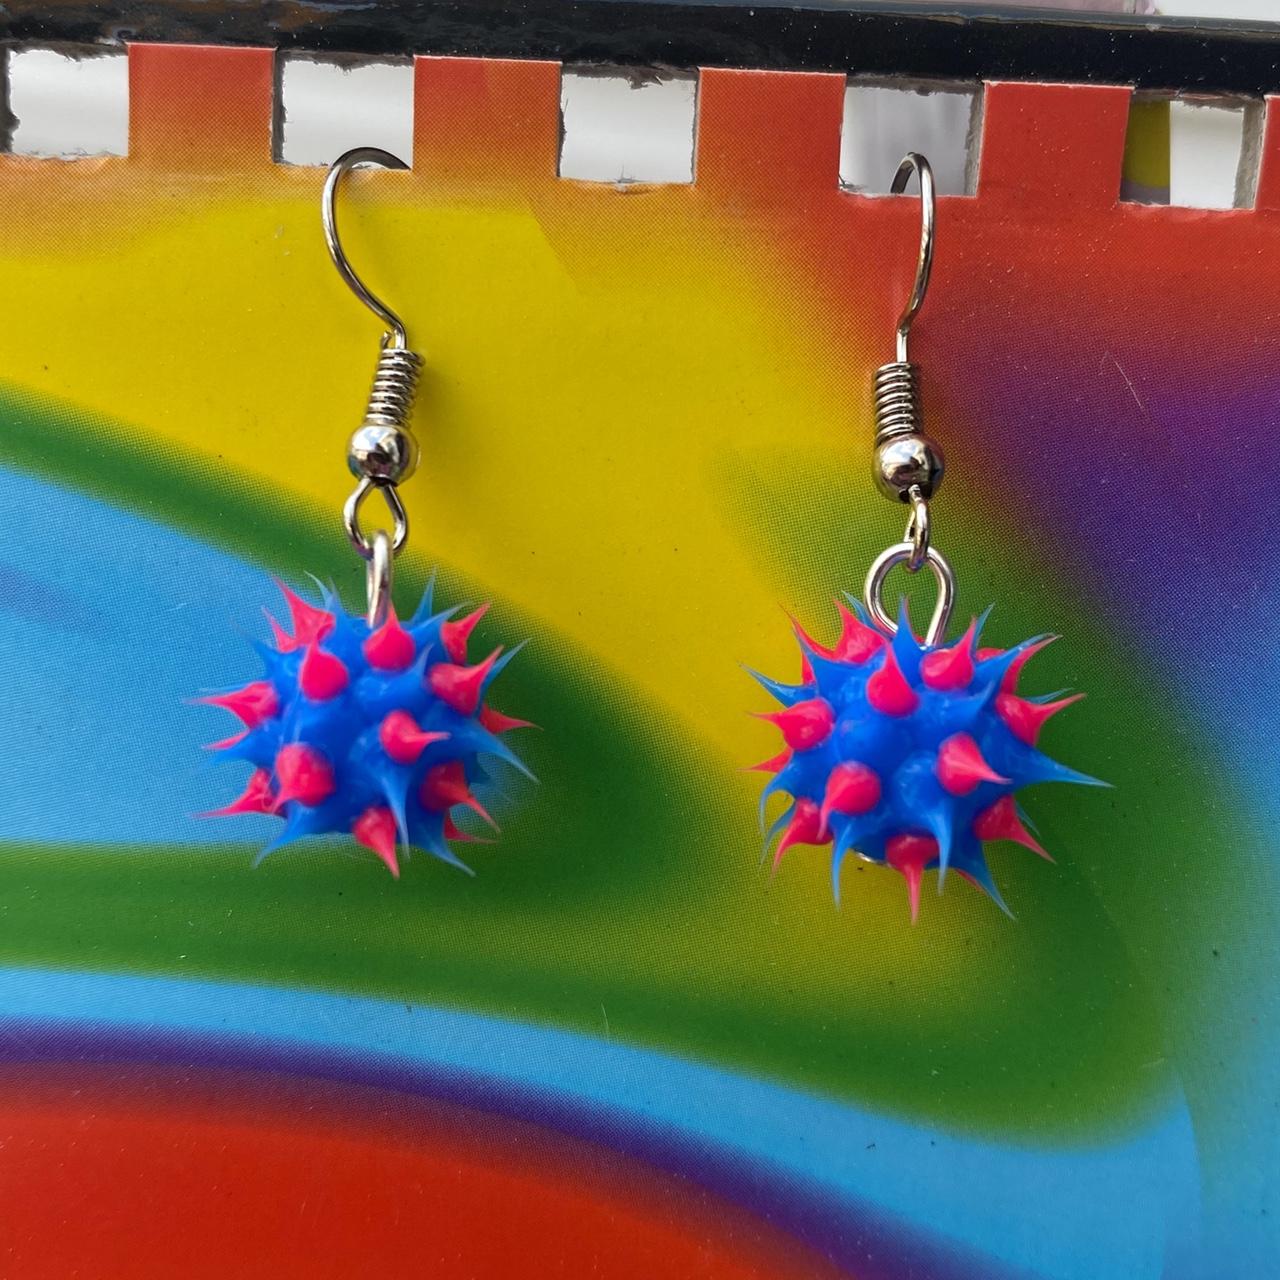 blue & pink rubber spike earrings major nostalgia - Depop